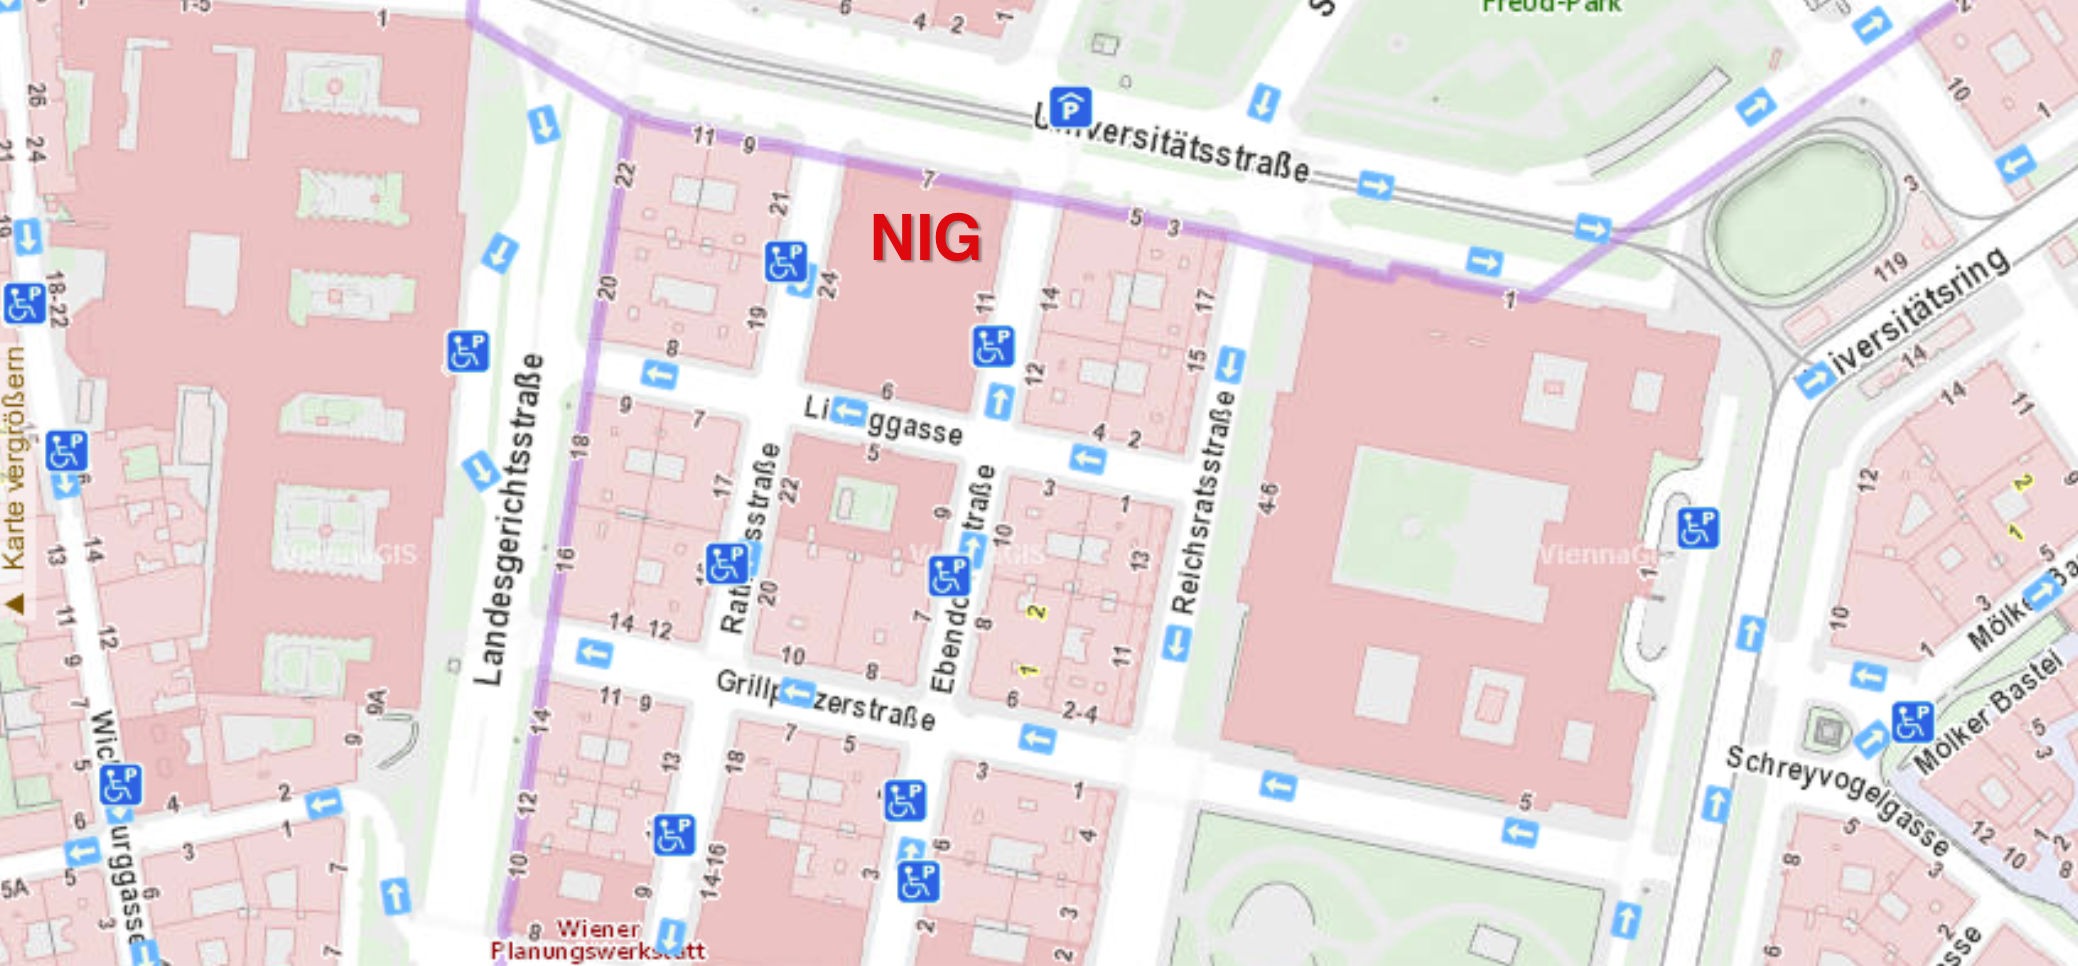 NIG-Accessibility-Map